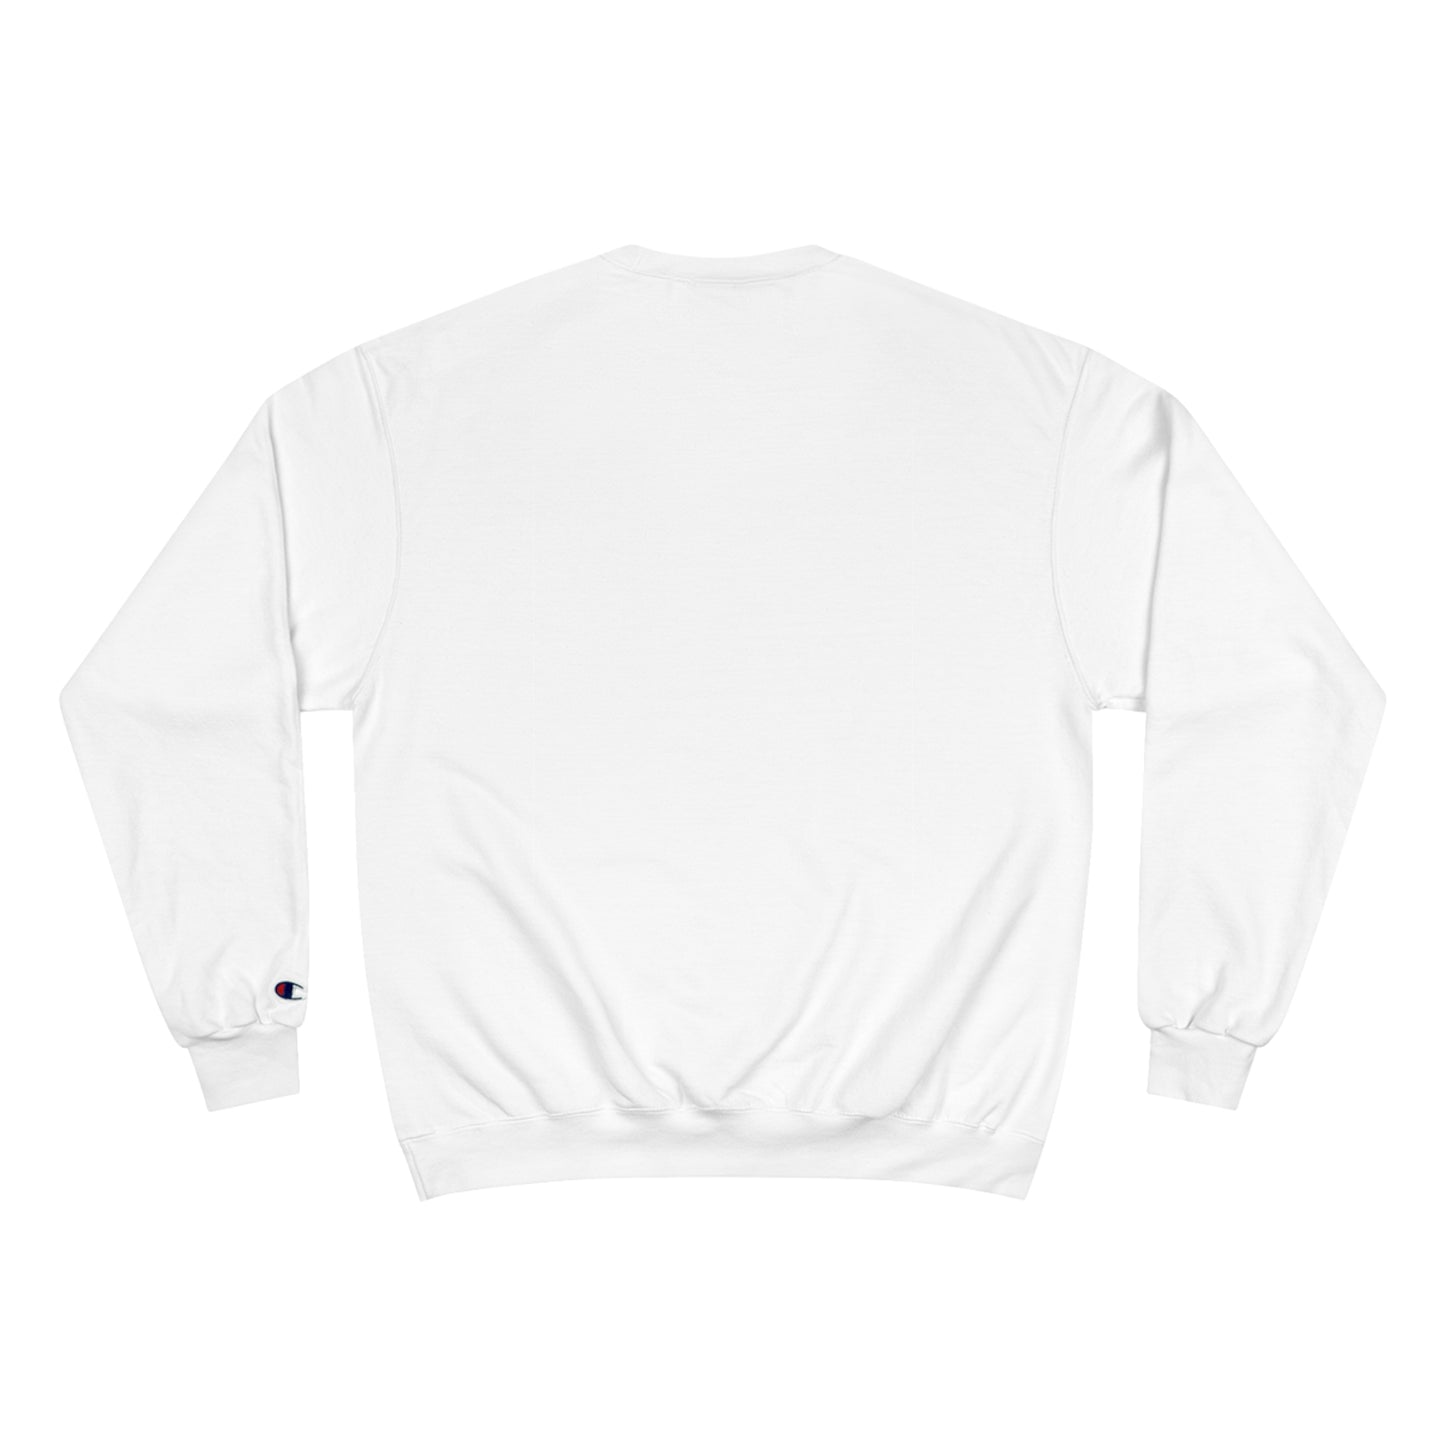 White Logo on Champion Sweatshirt